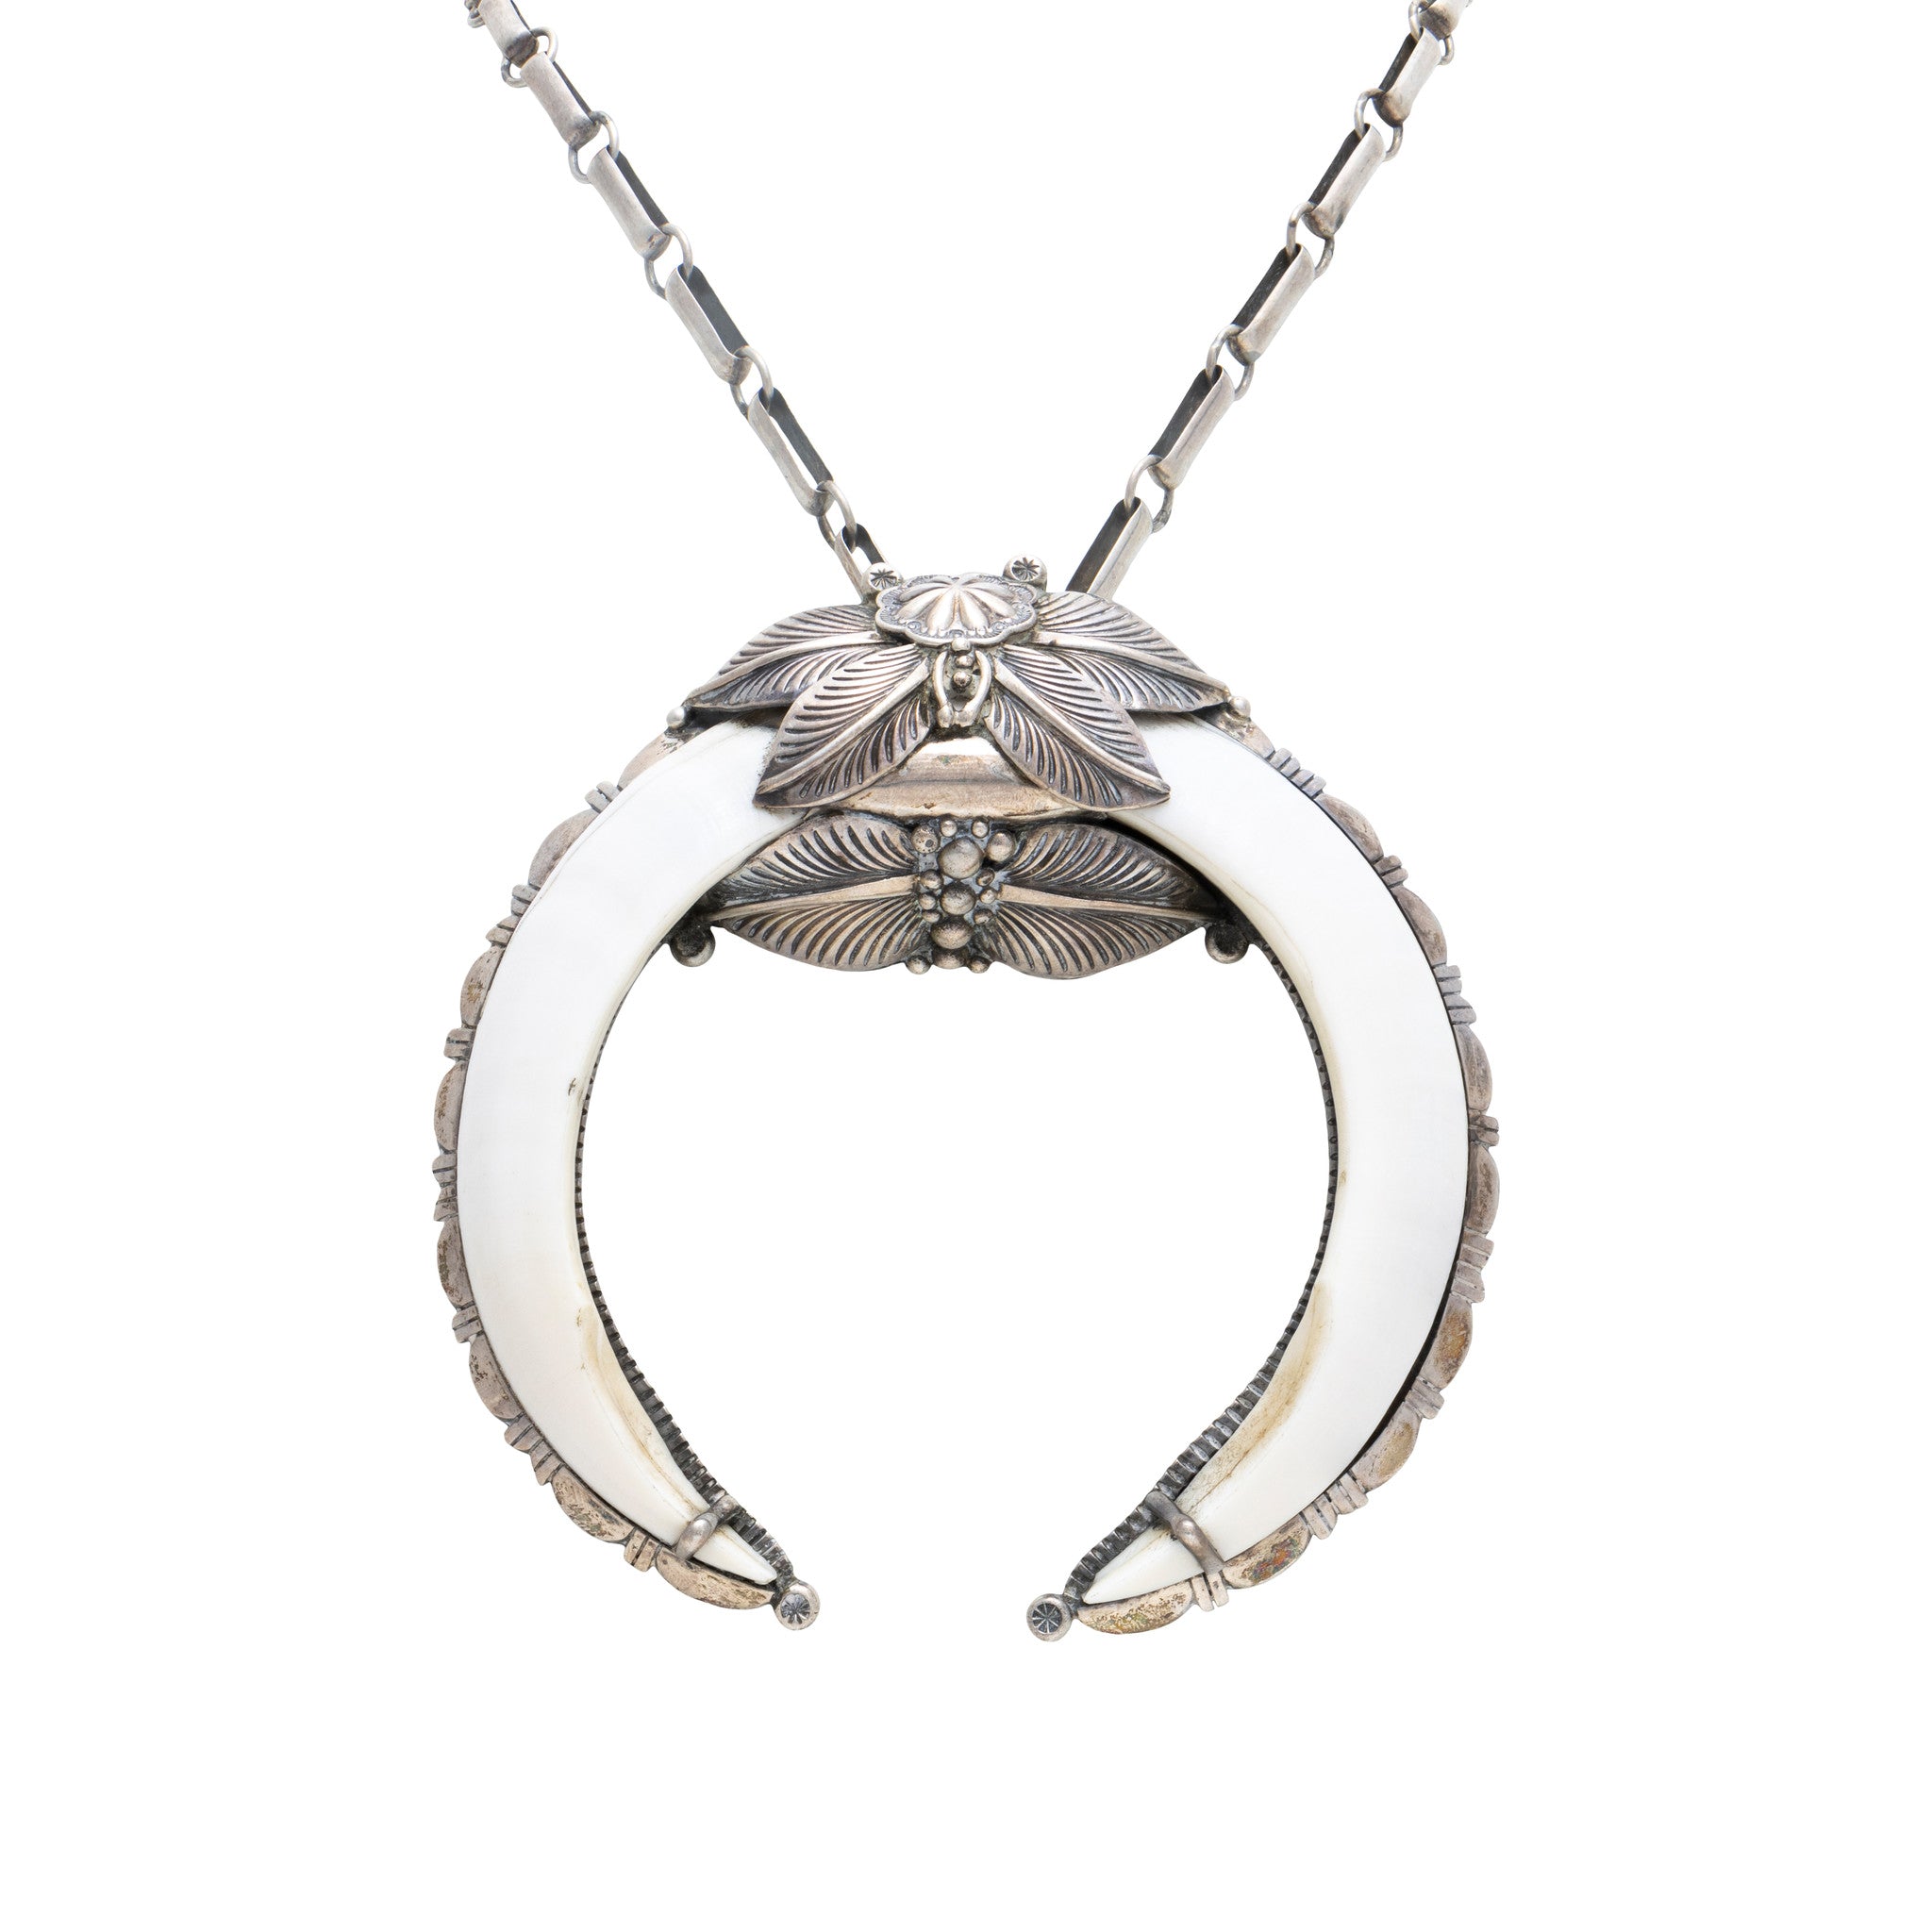 Navajo Boar Tusk Necklace, Jewelry, Necklace, Native